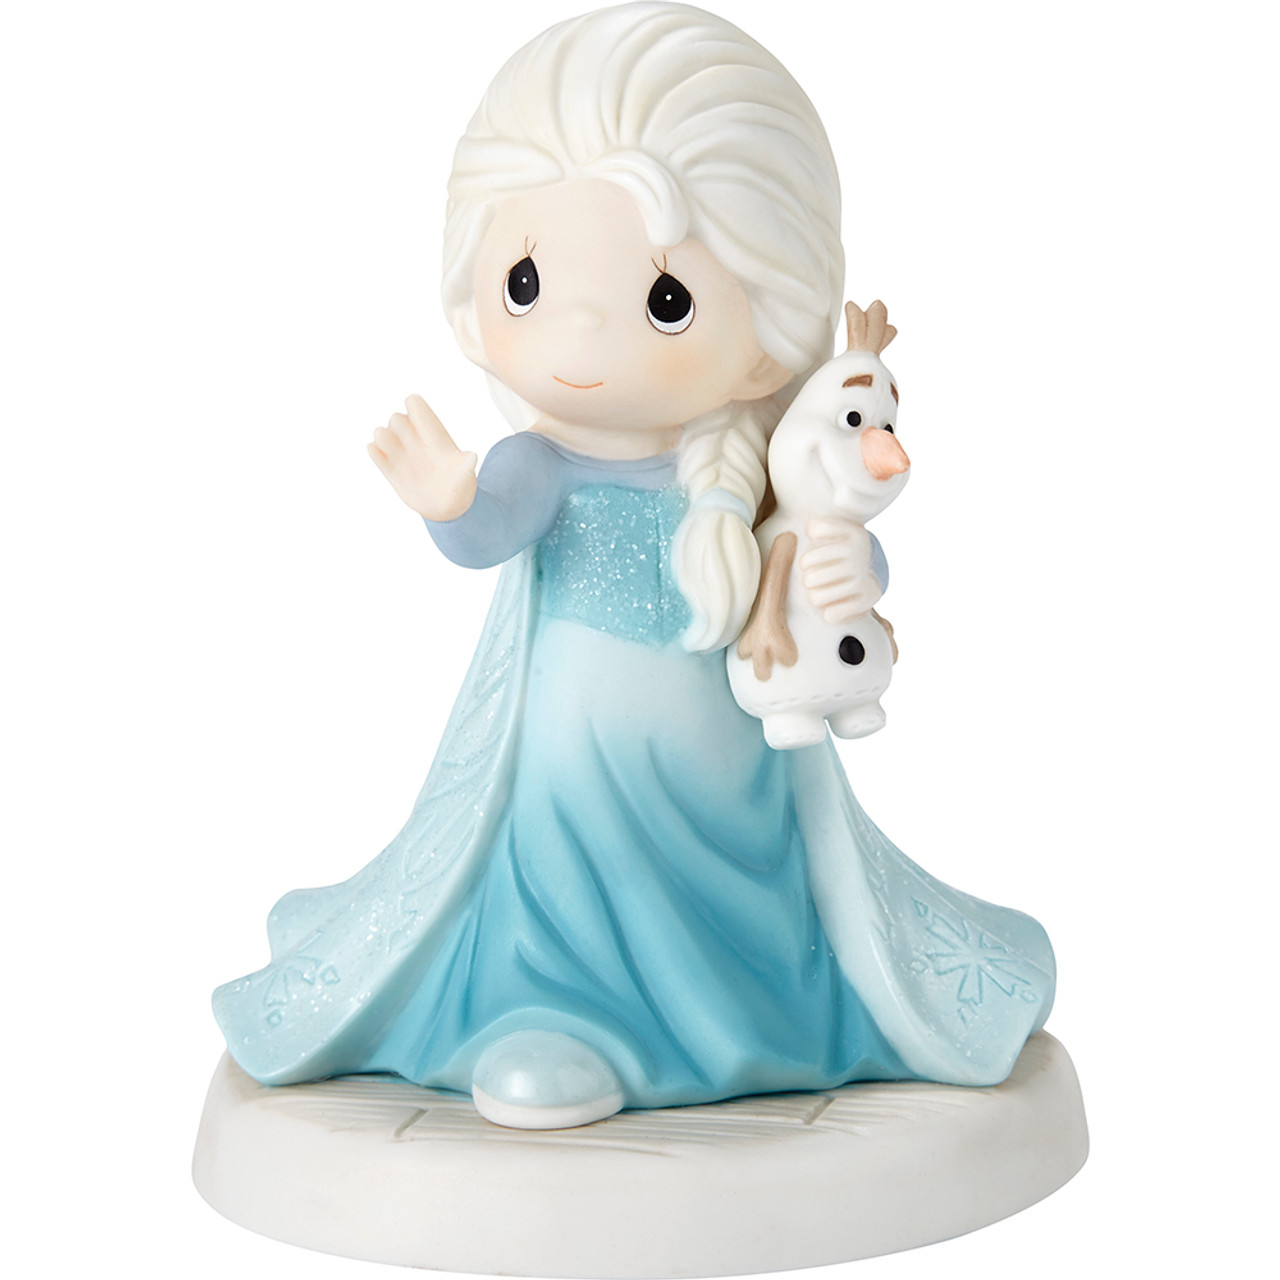 Disney's Frozen Elsa Figure